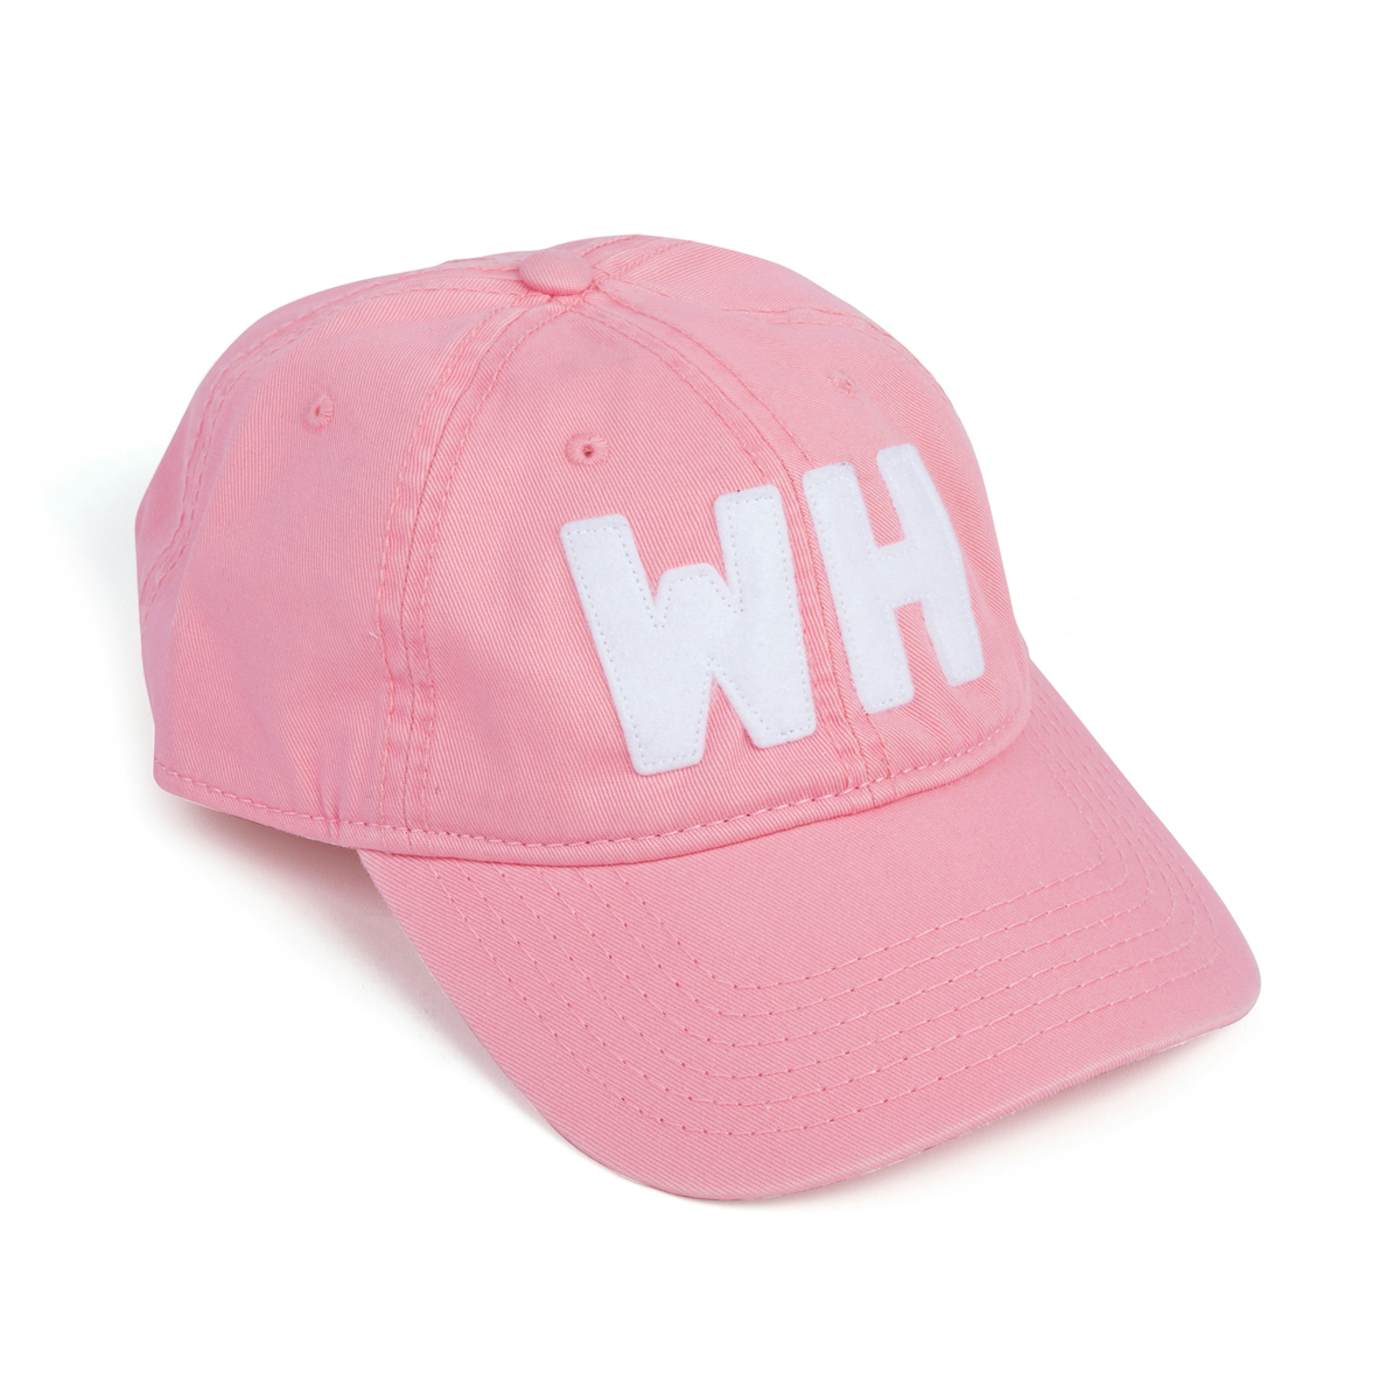 WH – Walker Hayes Hat - Pink